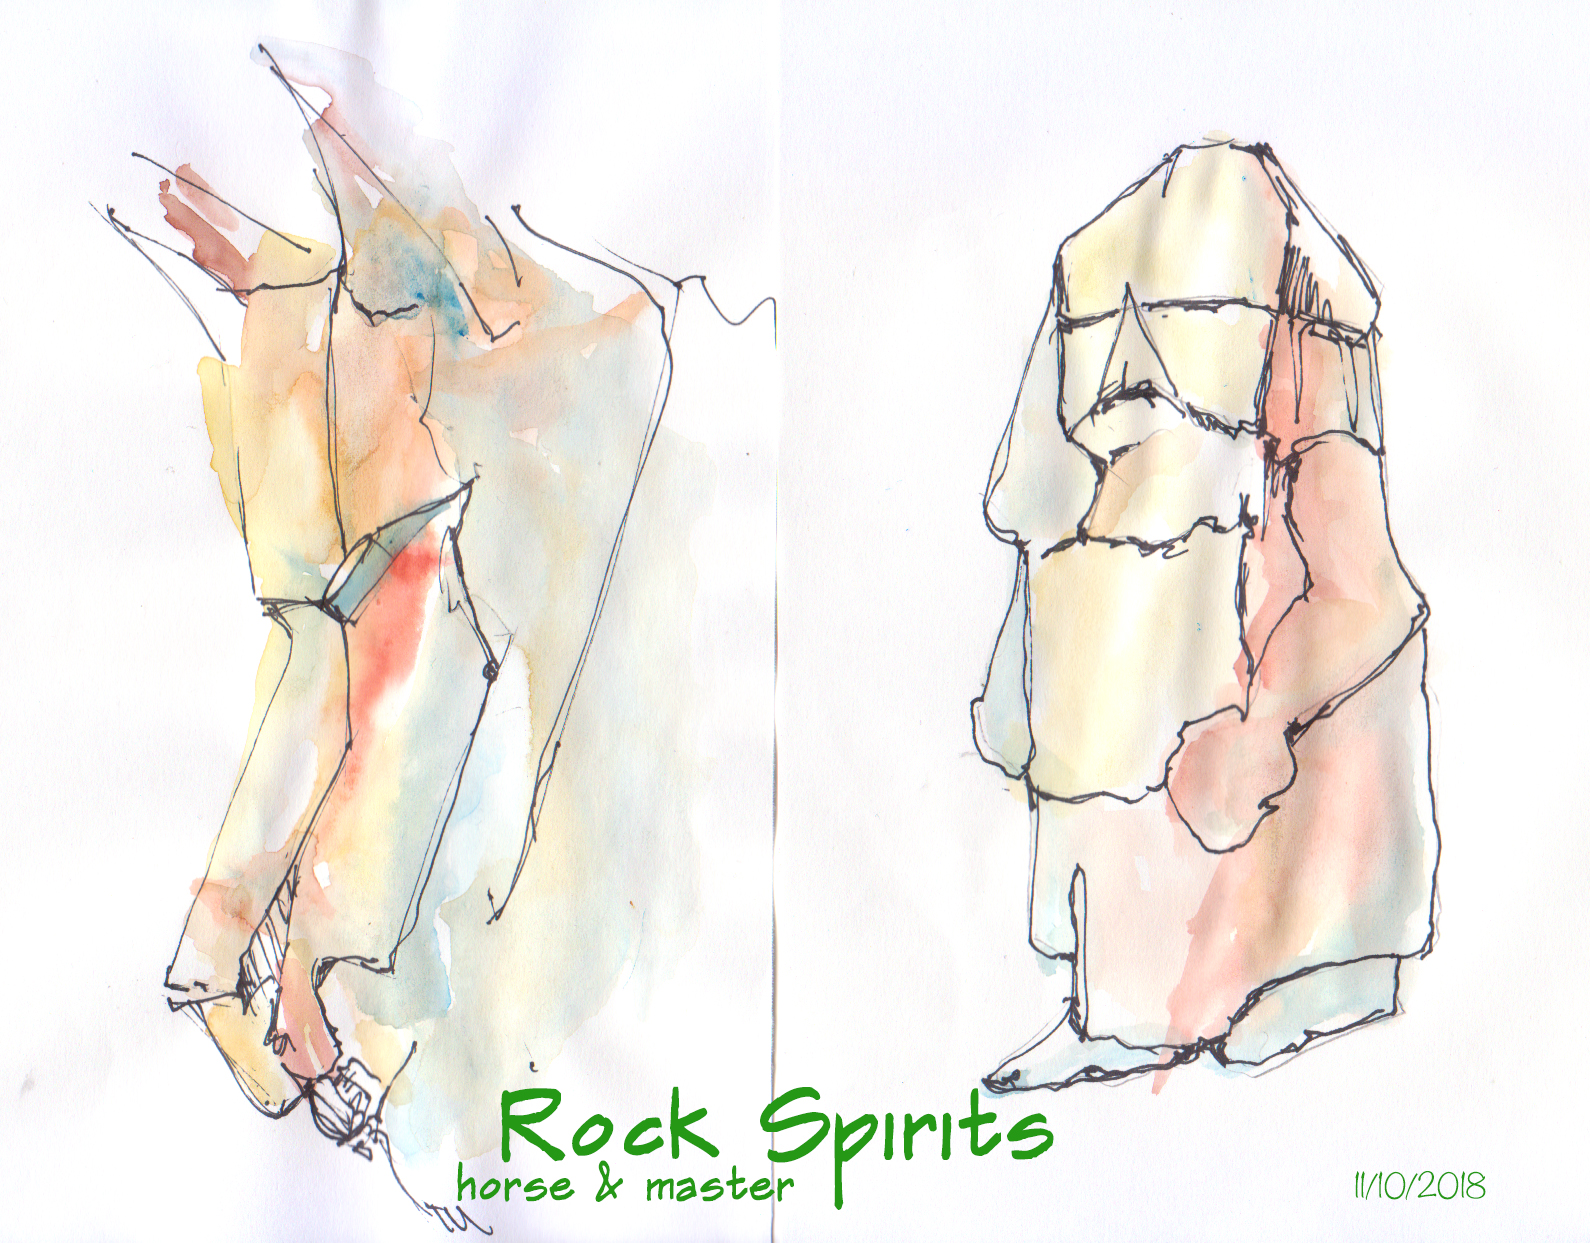 painting of rock spirits by Karen Little 2018